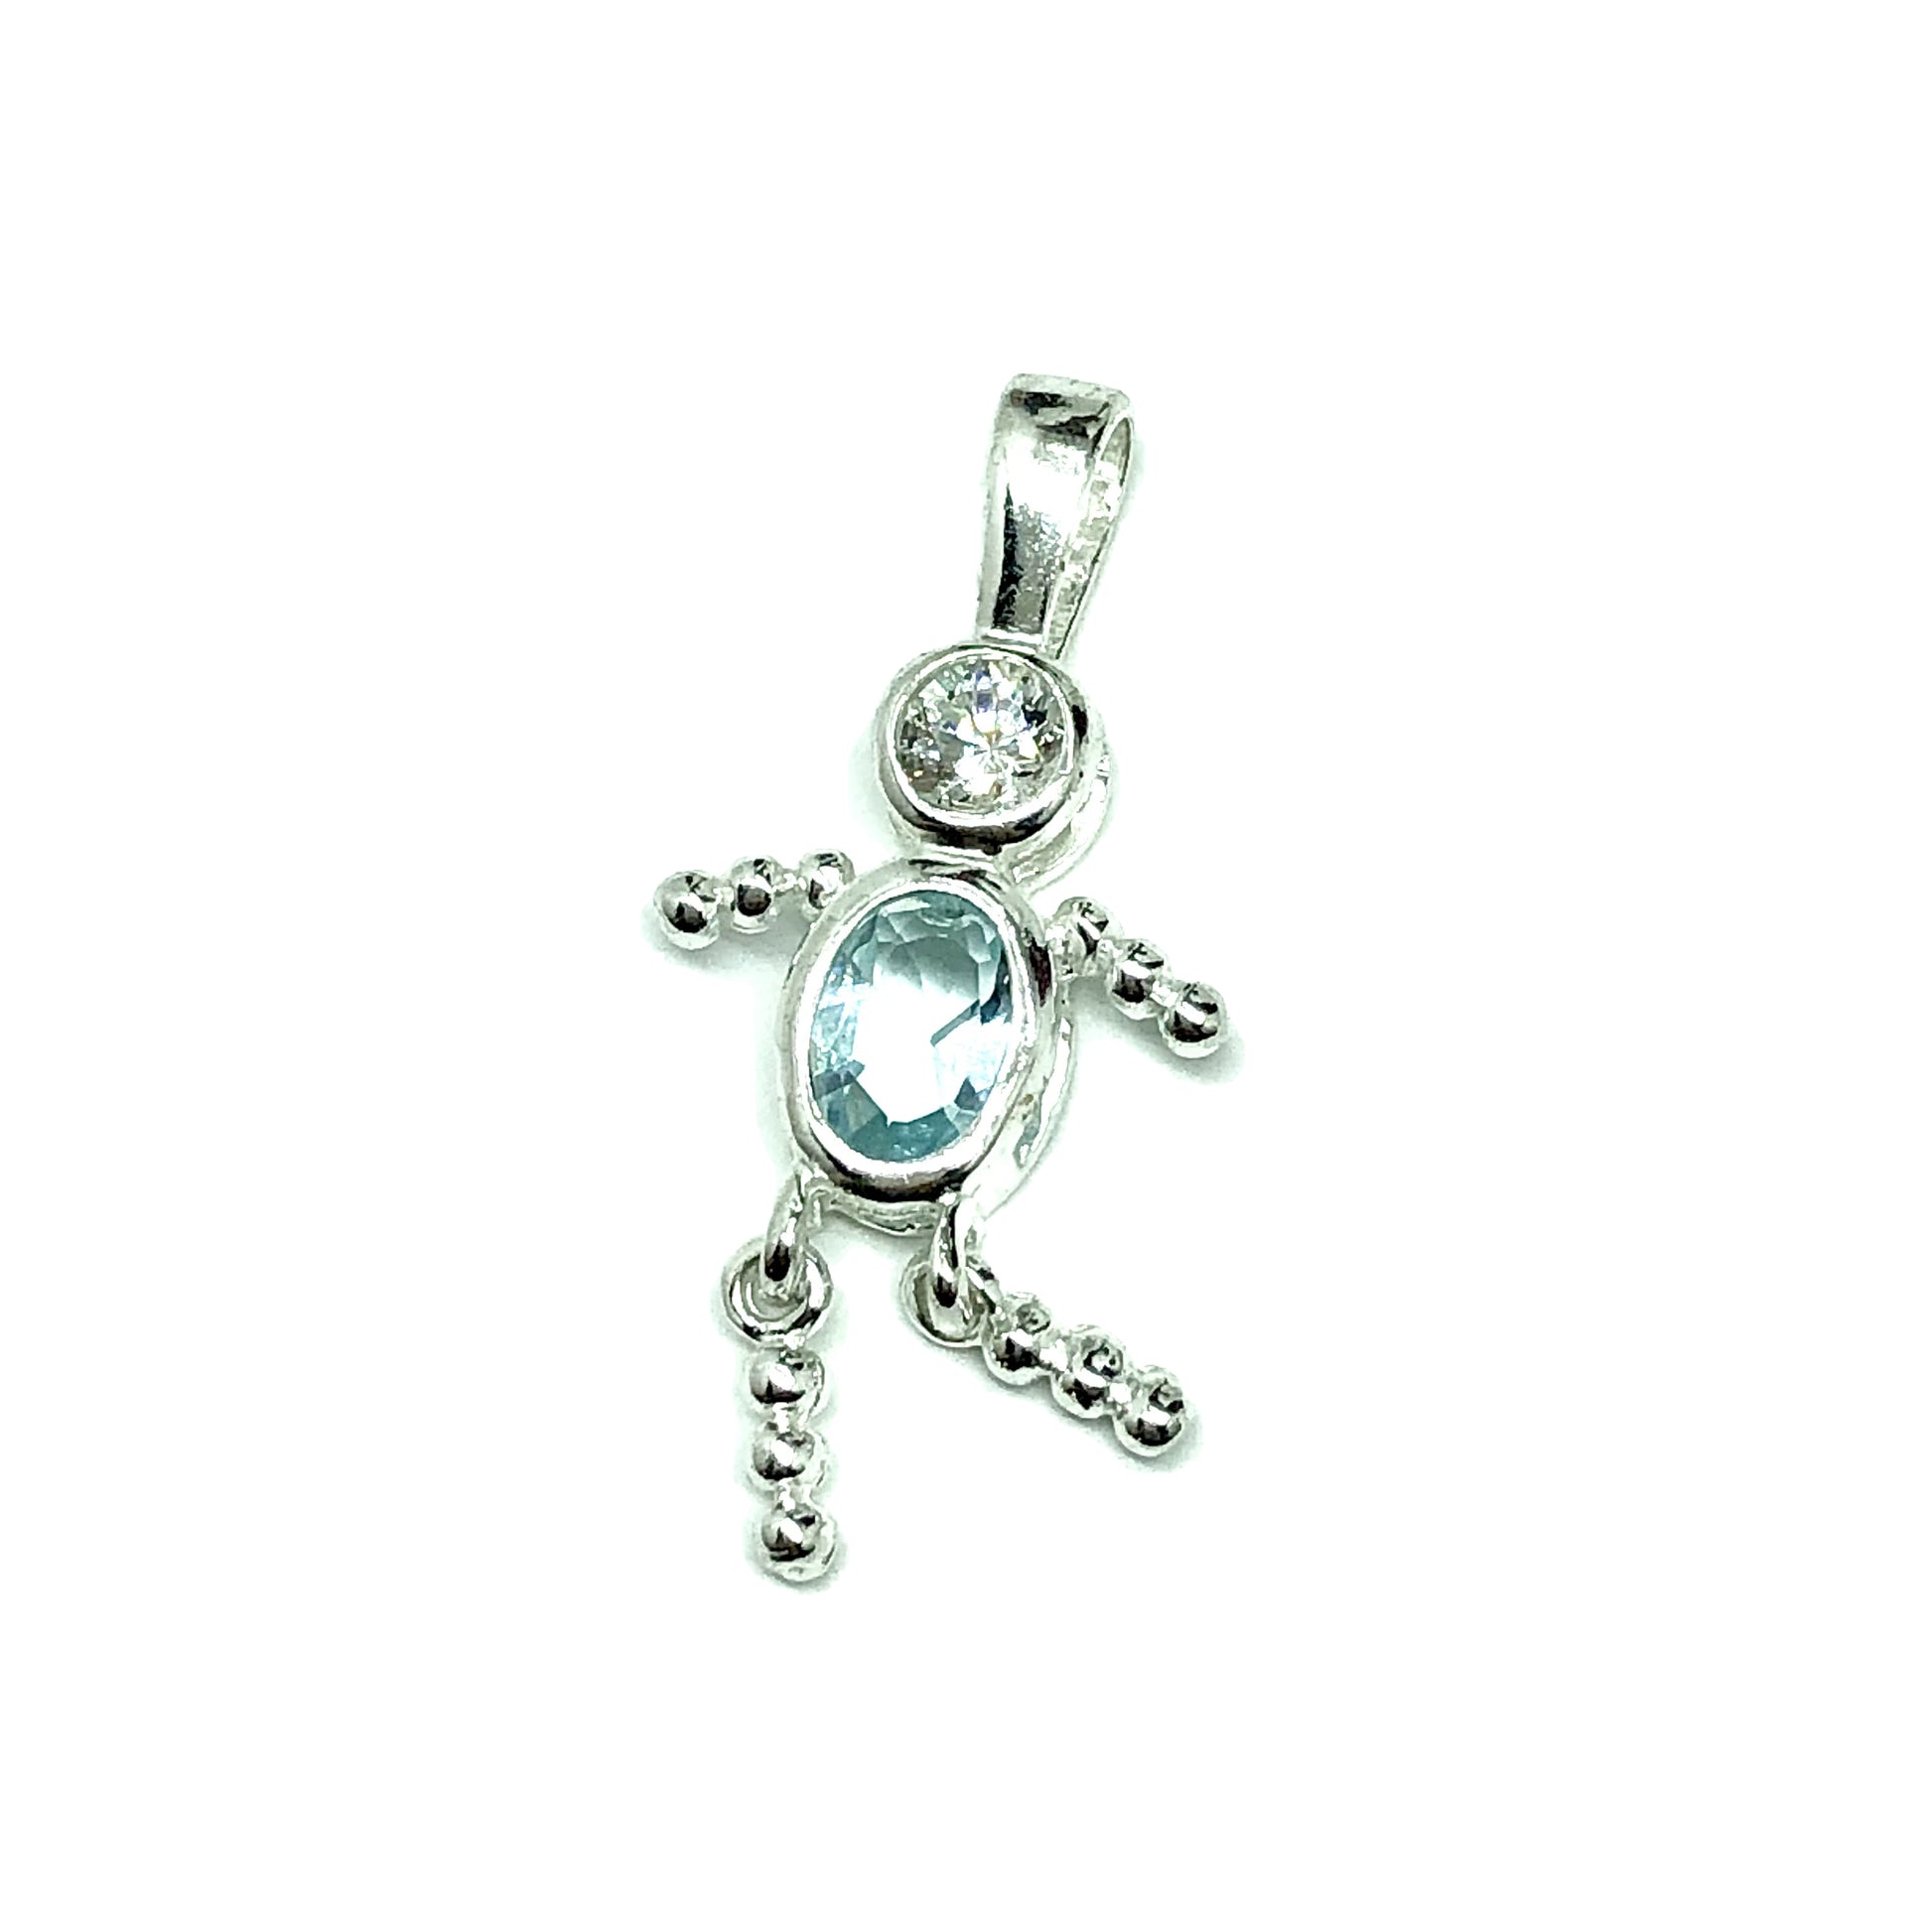 Secondhand Jewelry - 925 Sterling Silver Blue Cz December Birthstone Boy Girl Pendant